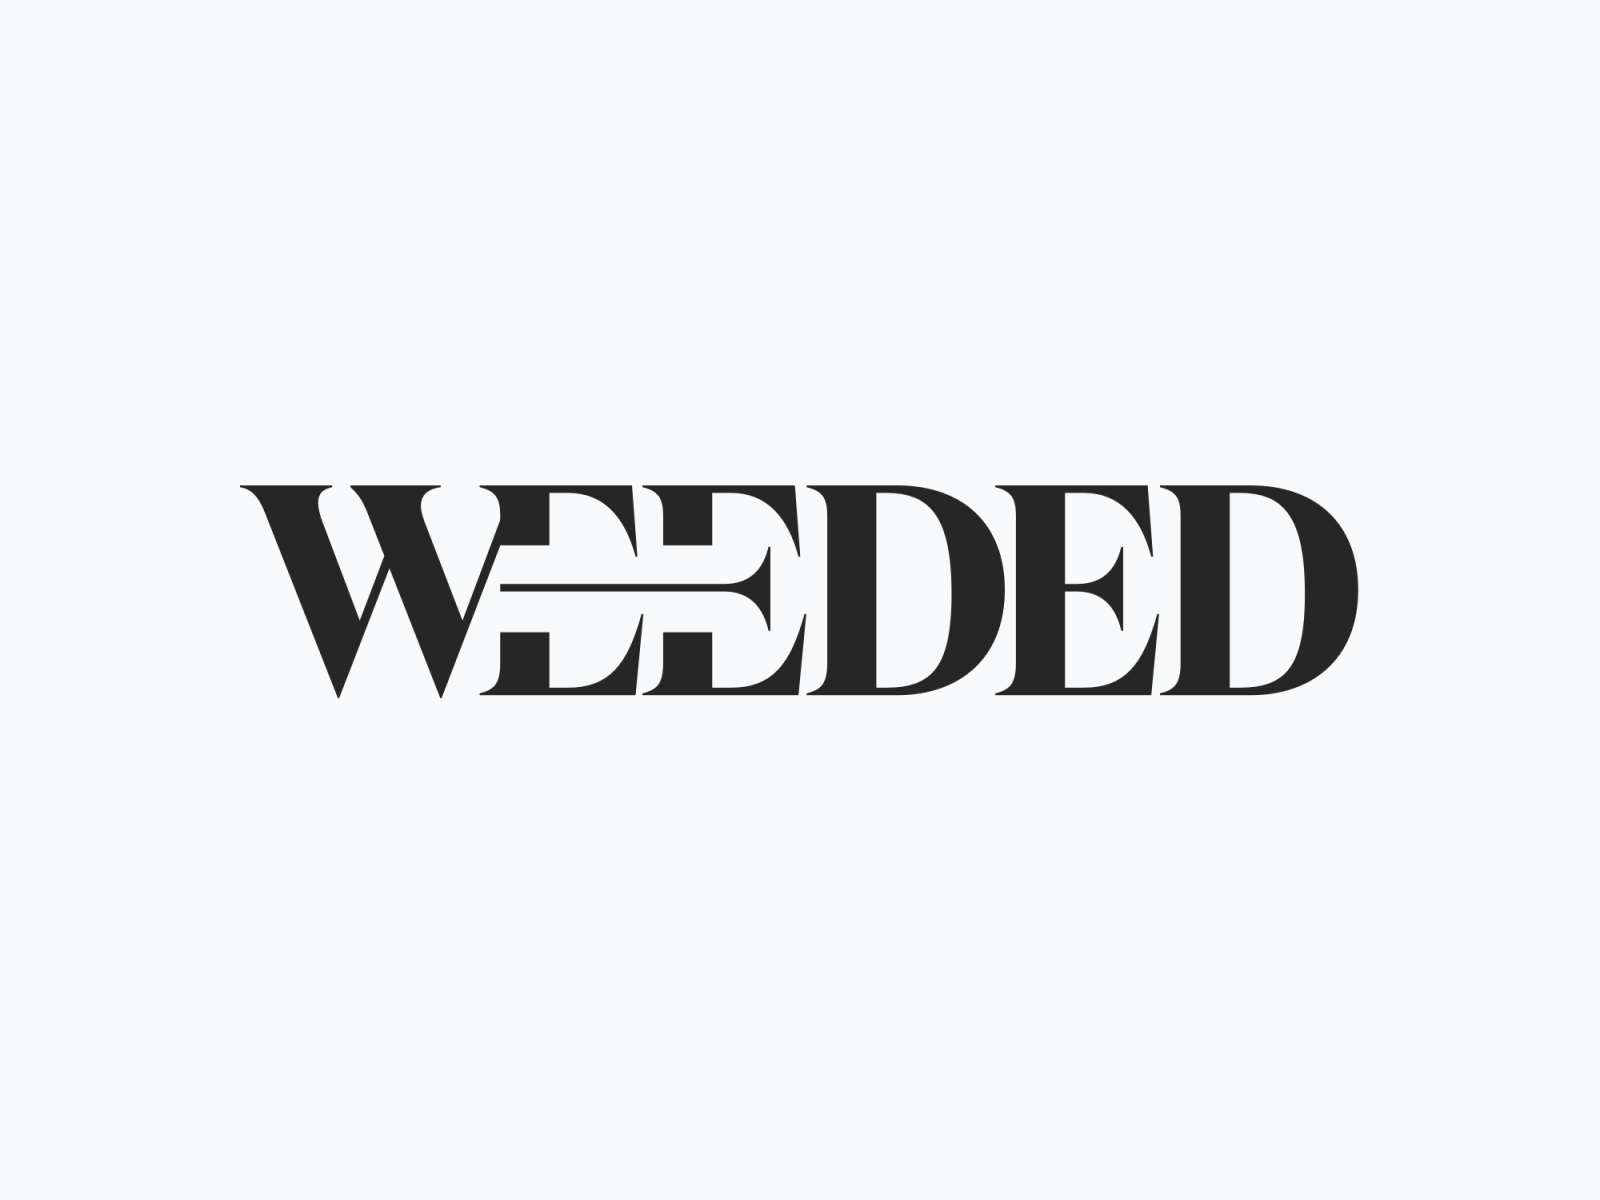 WEEDED logo by Kosuke on Dribbble